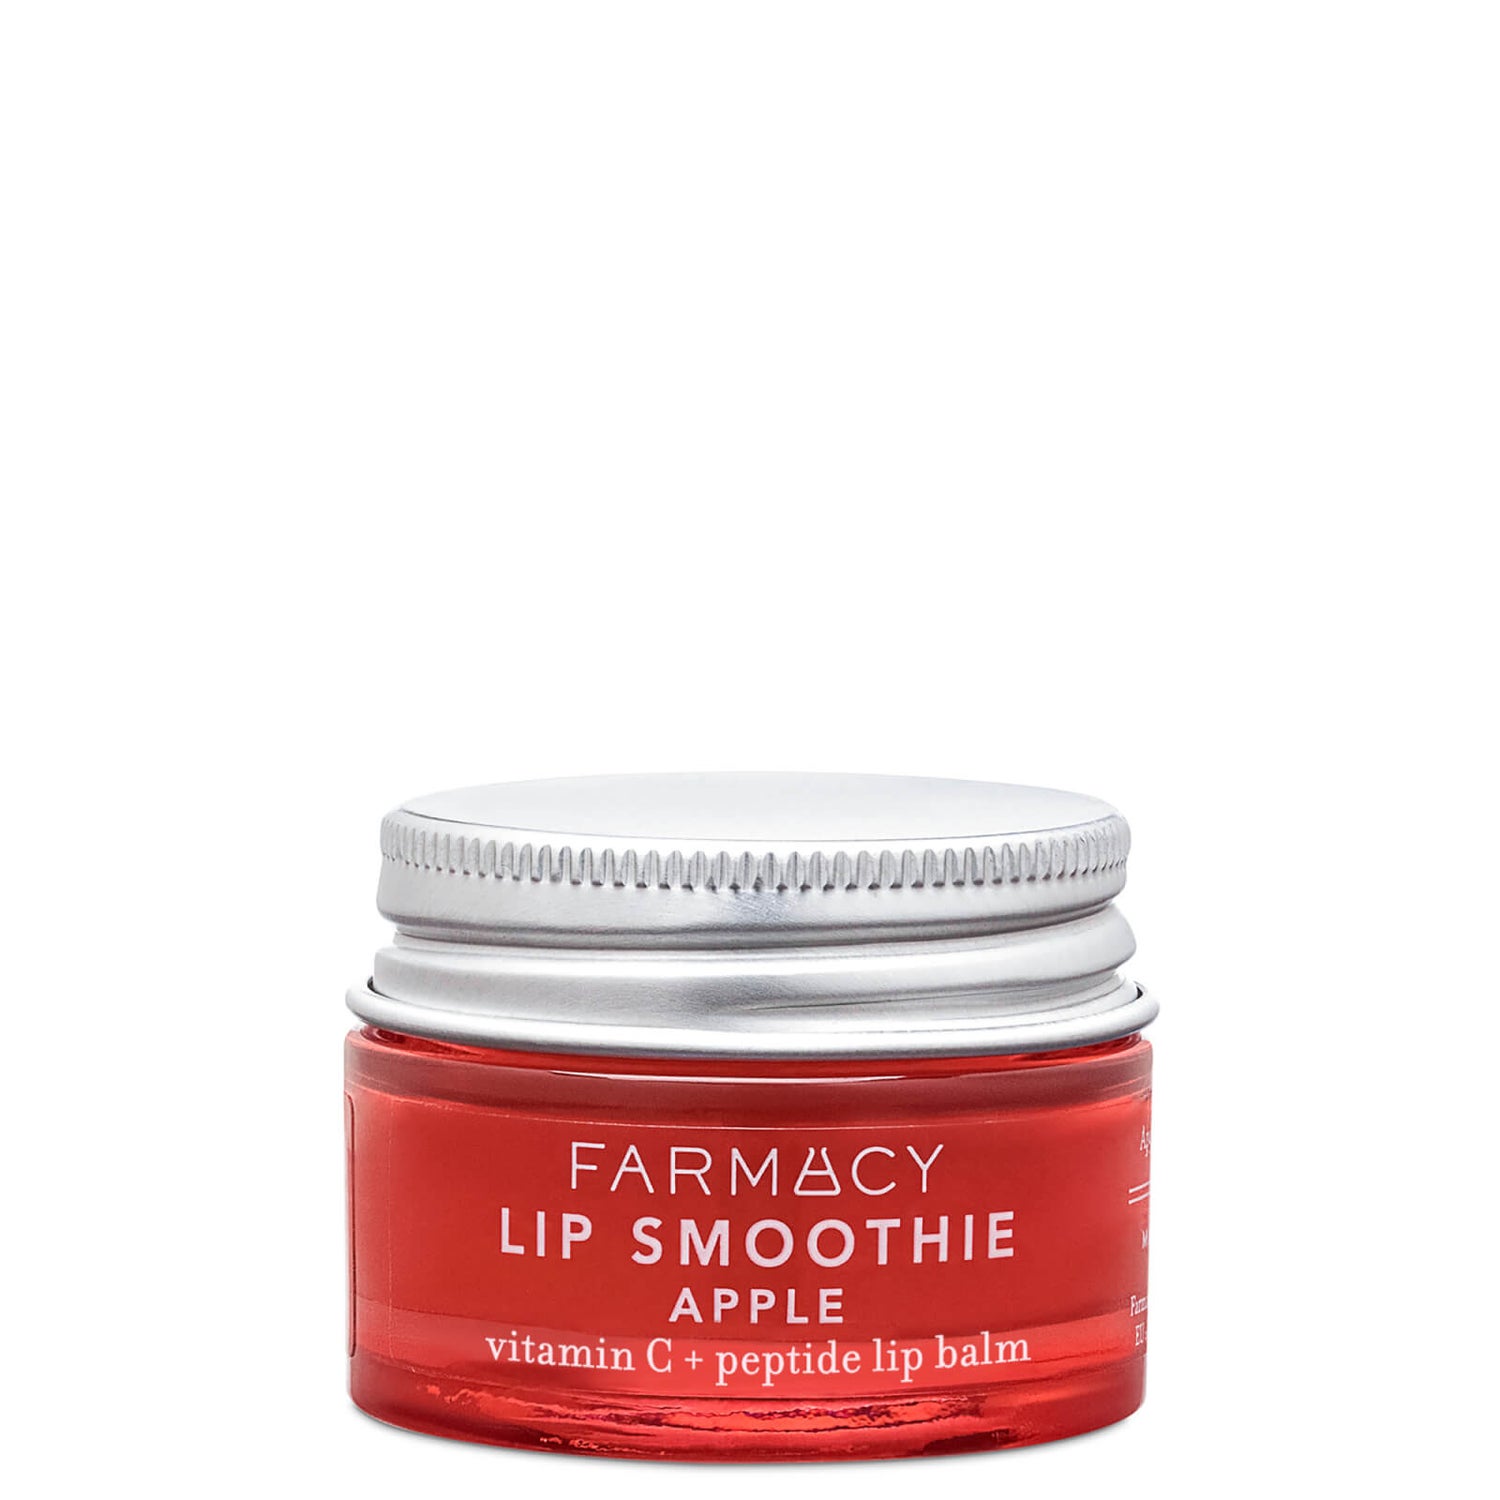 FARMACY Lip Smoothie Vitamin C and Peptide Lip Balm - Apple 10g